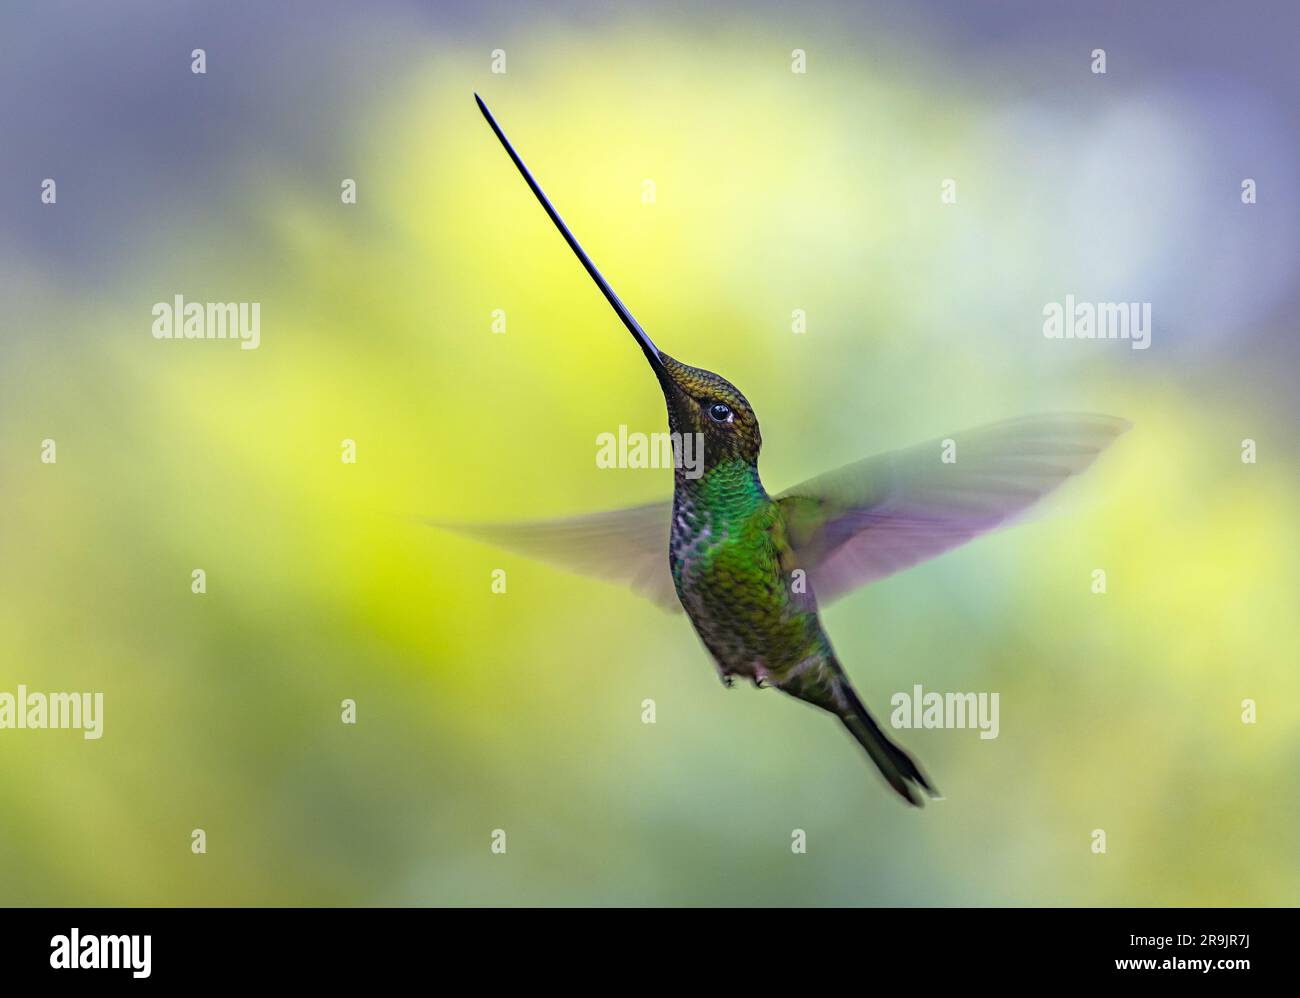 A Sword-billed Hummingbird (Ensifera ensifera) hovering in mid air. Colombia, South America. Stock Photo